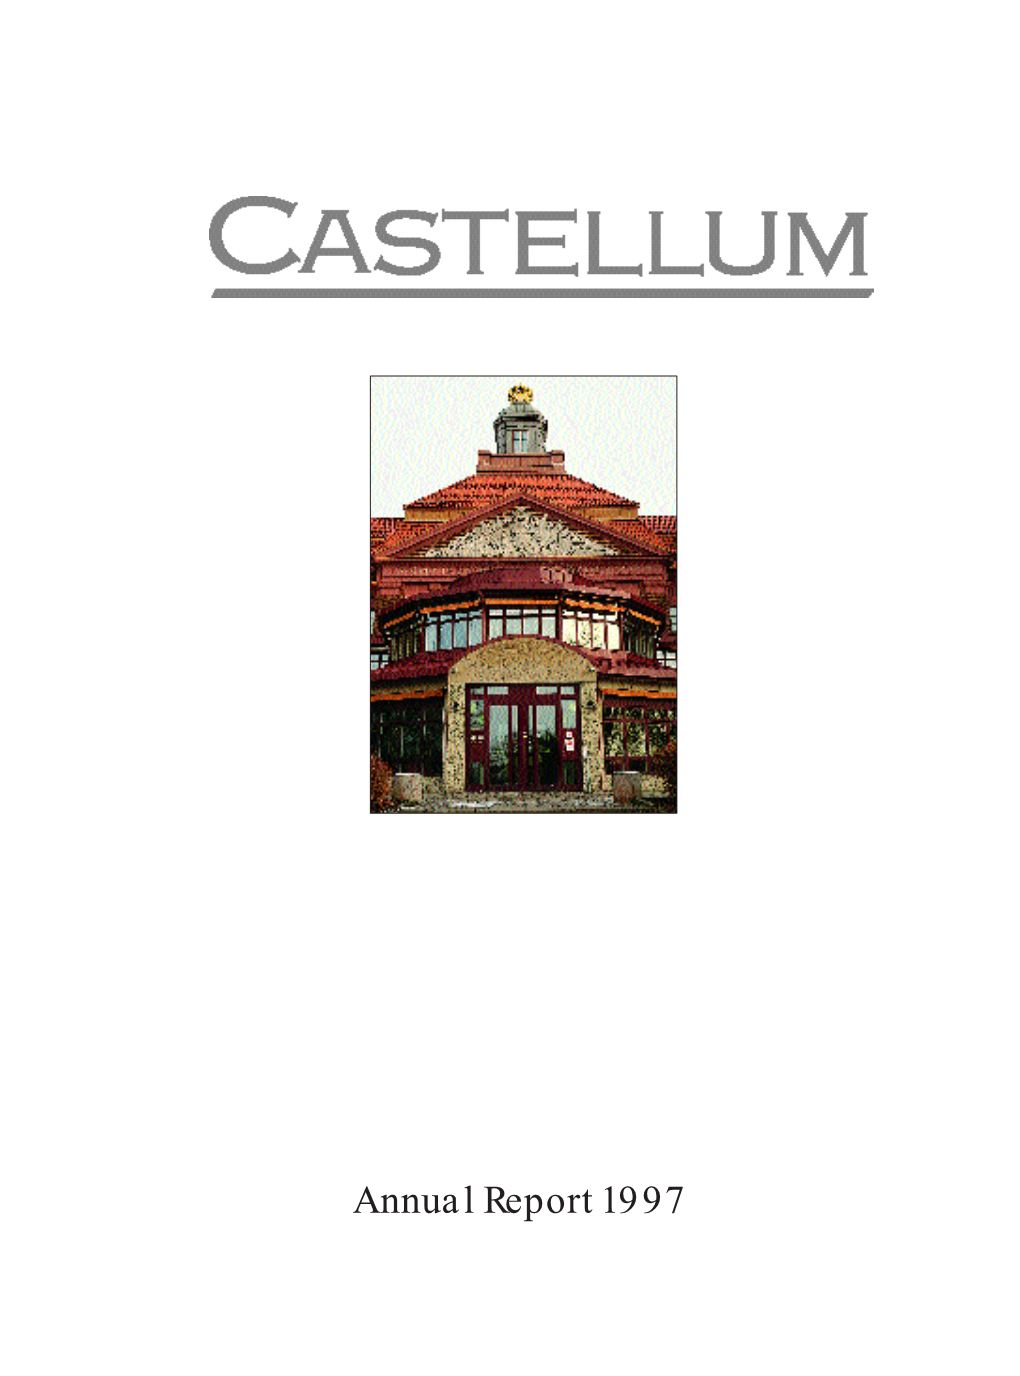 Annual Report 1997 Contents 1 Castellum 1997 2 Managing Director’S Comments